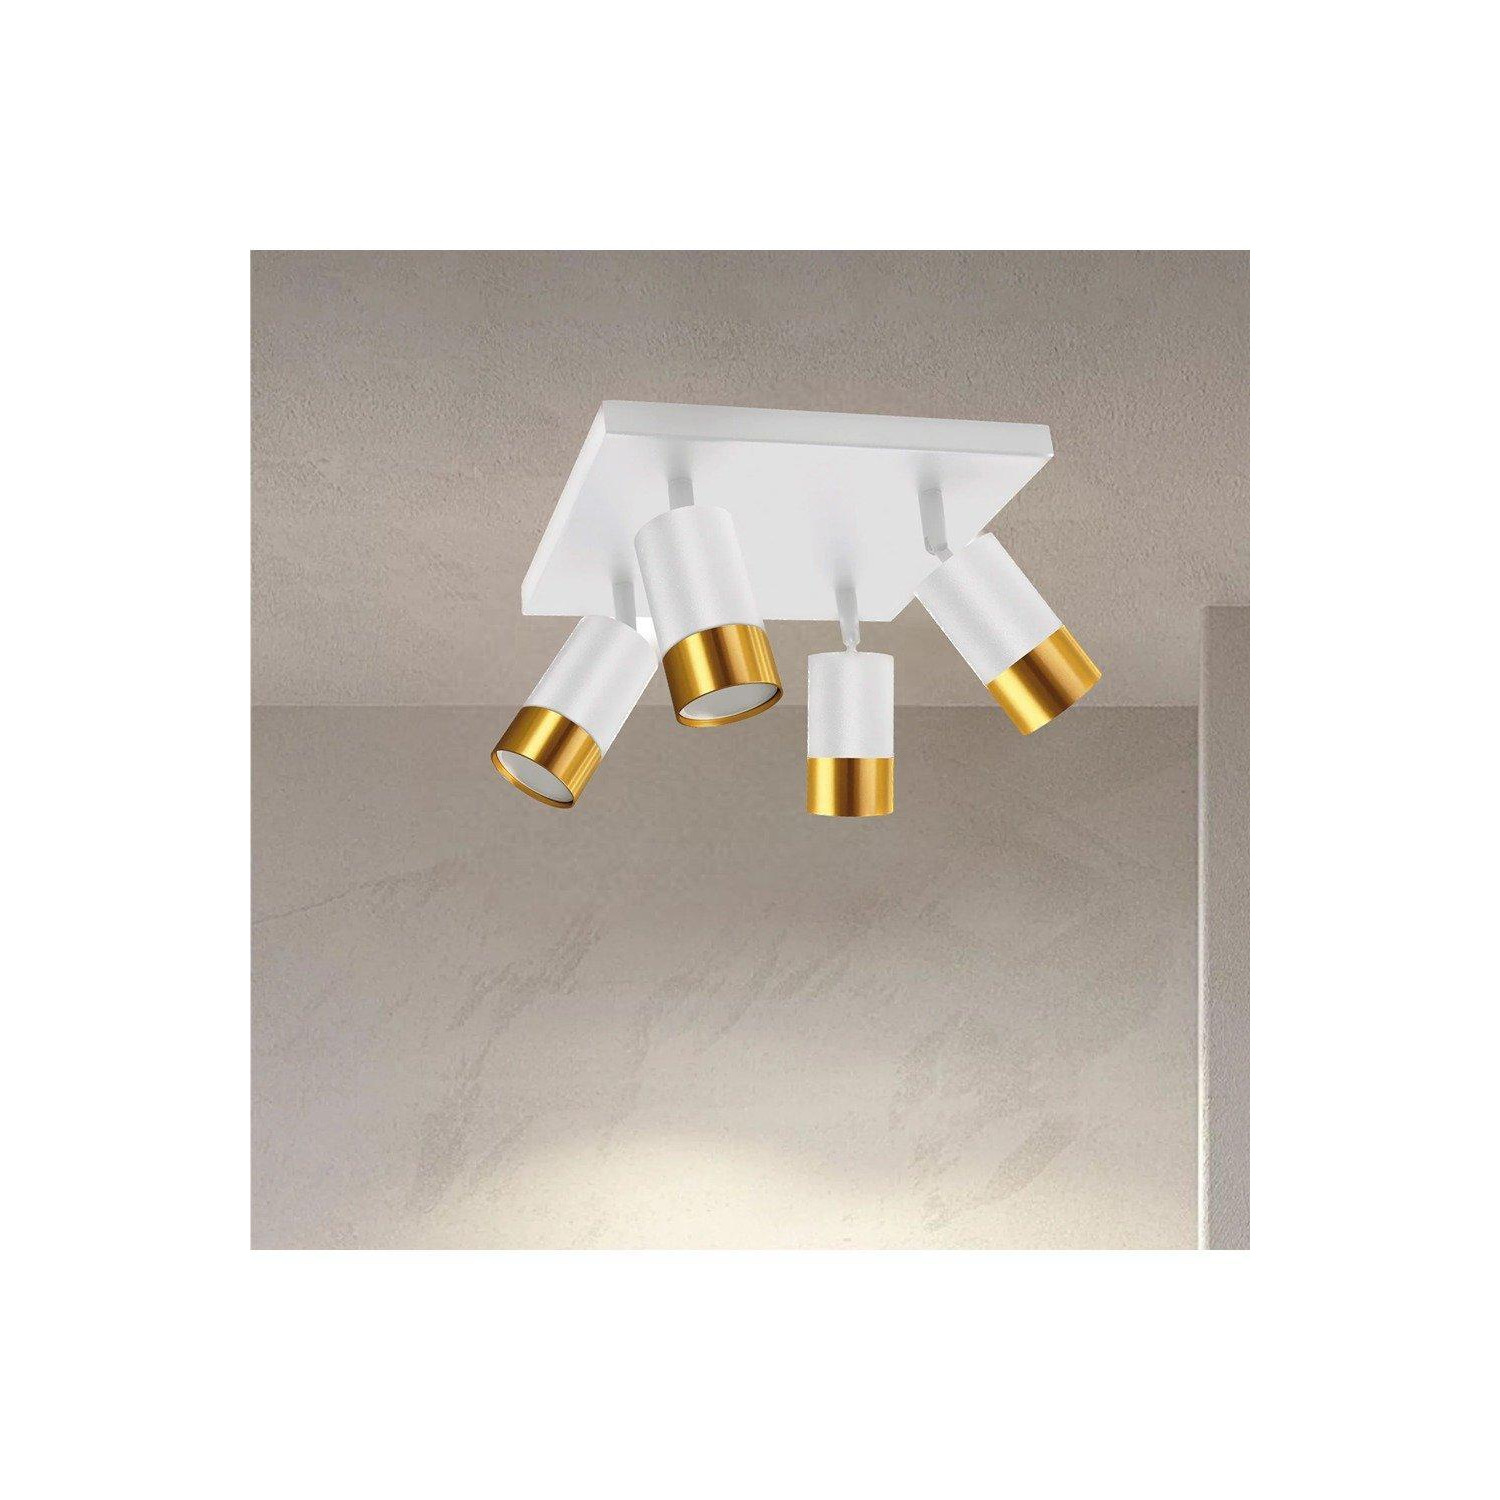 'Puzon' White & Gold GU10 Adjustable Four Head GU10 Ceiling Spotlight Bar Light - image 1